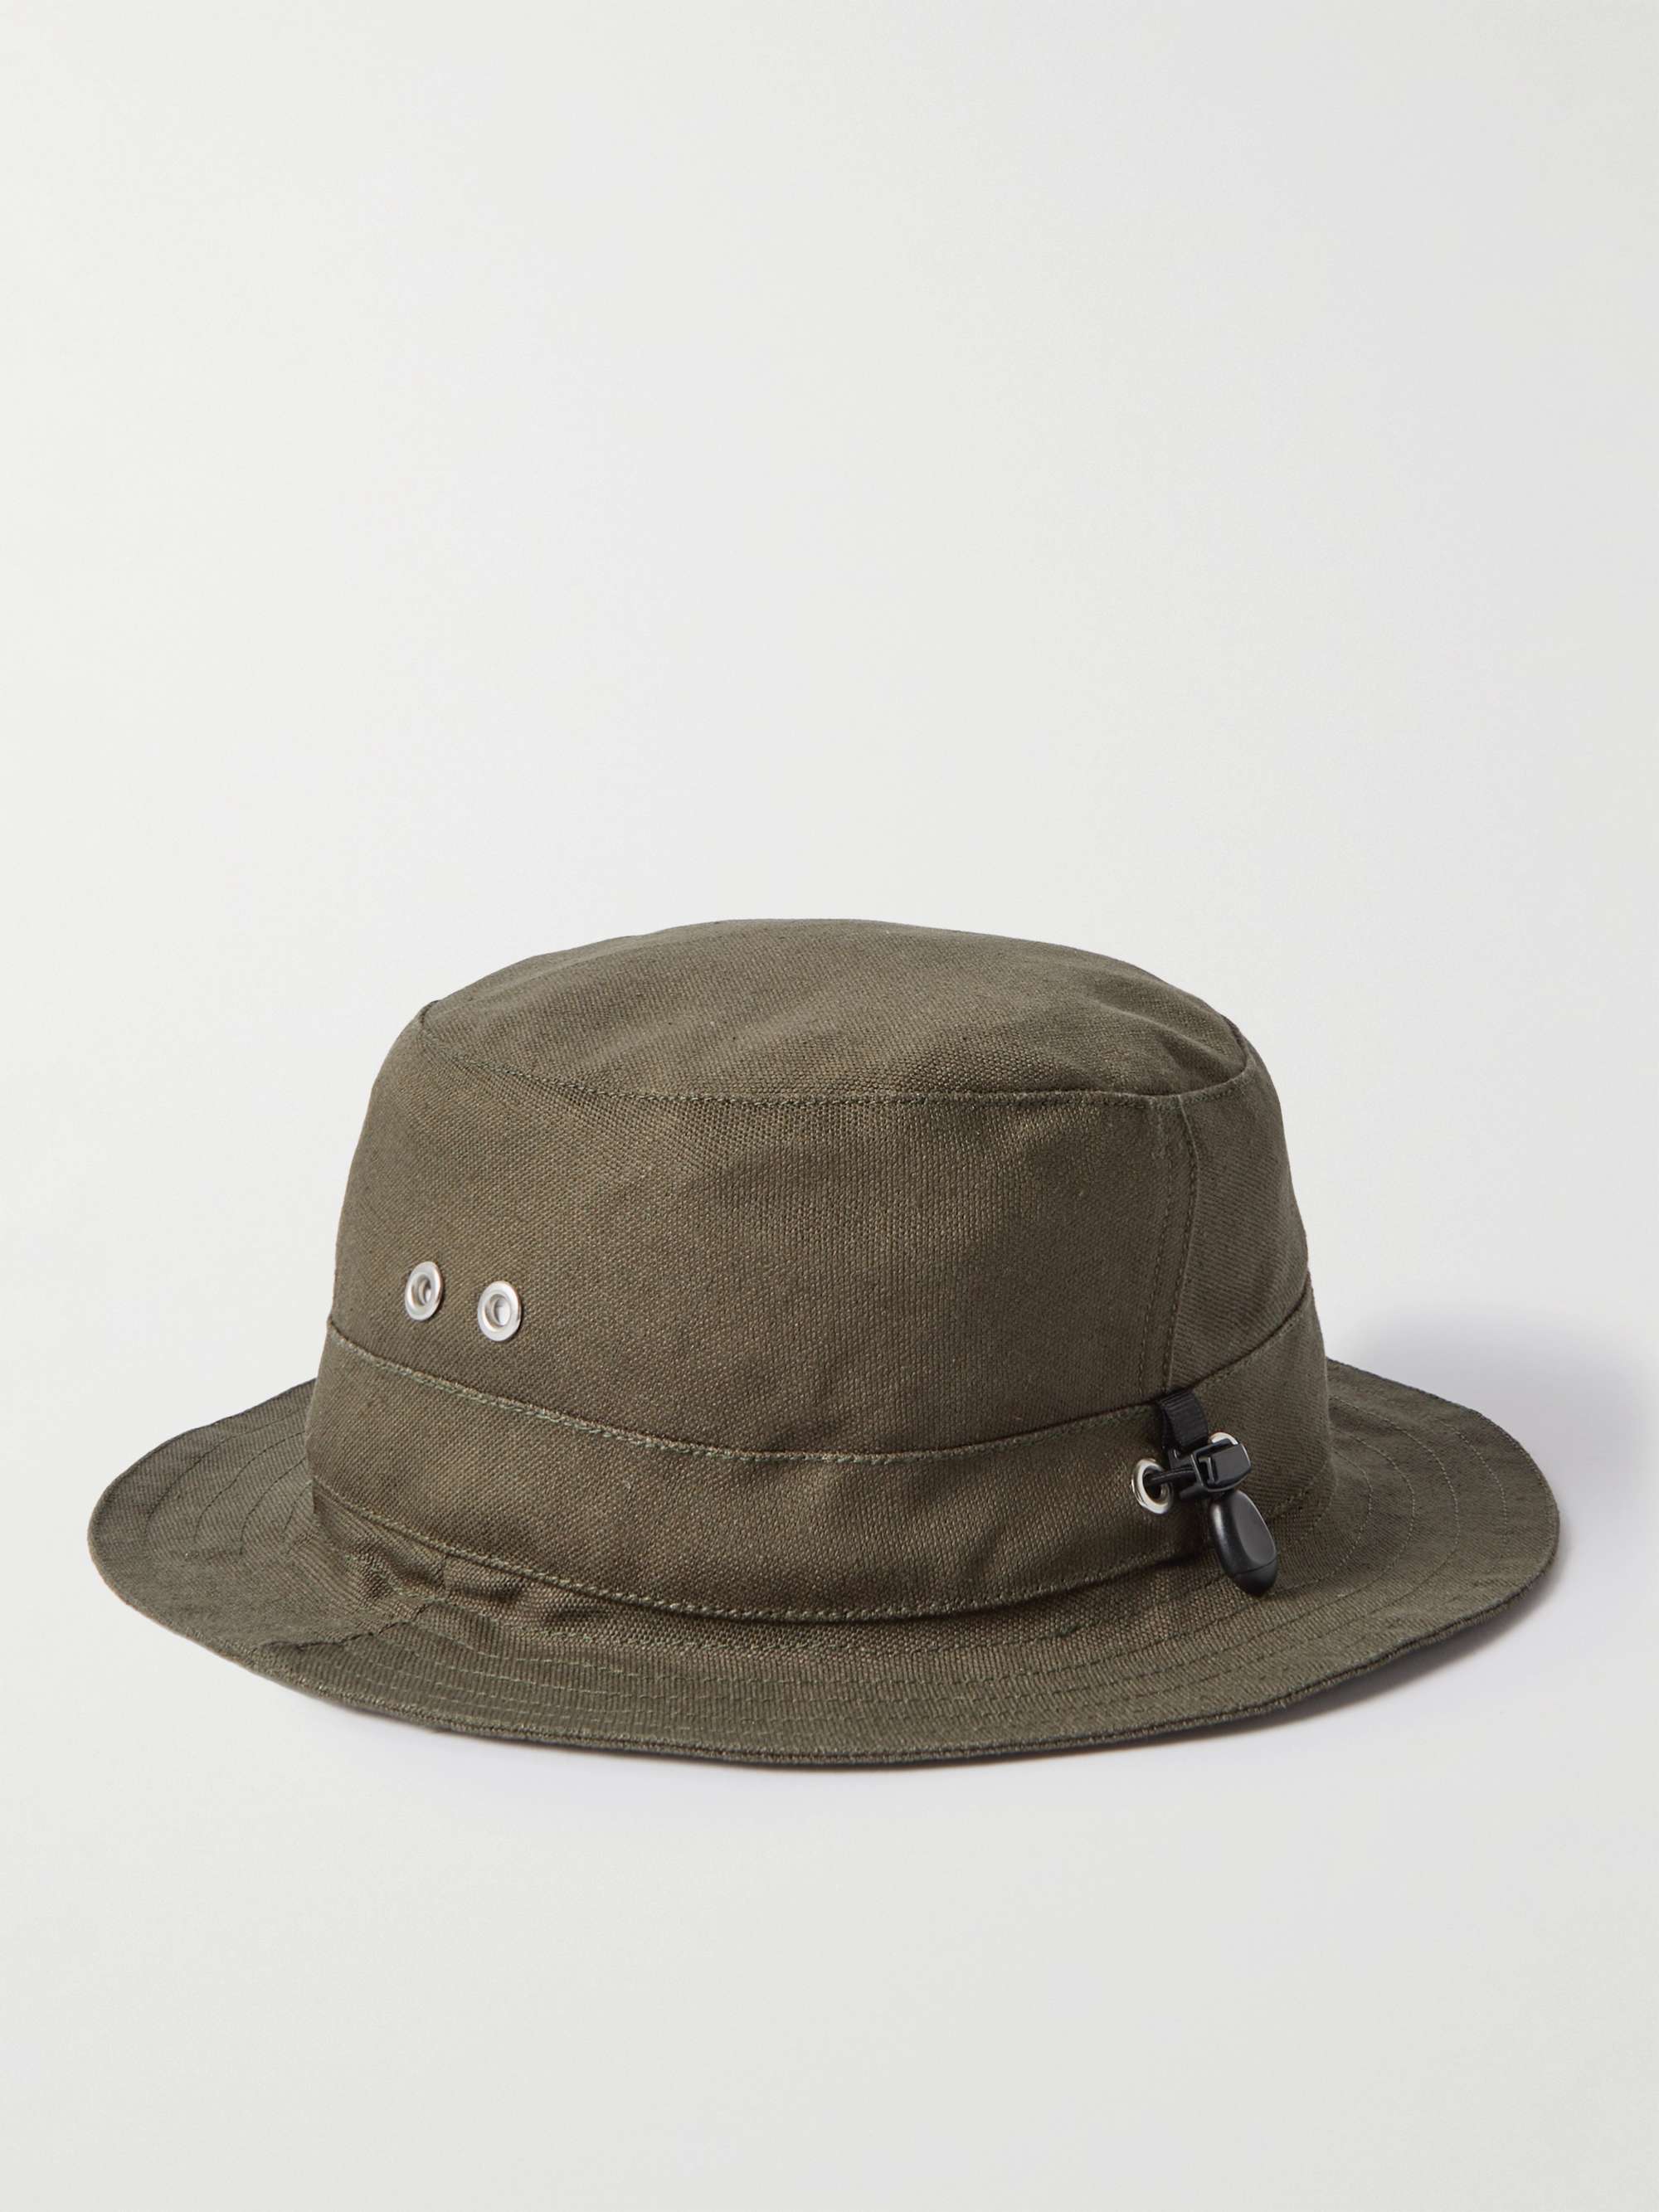 OSTRYA Otis Hemp and Organic Cotton-Blend Canvas Bucket Hat